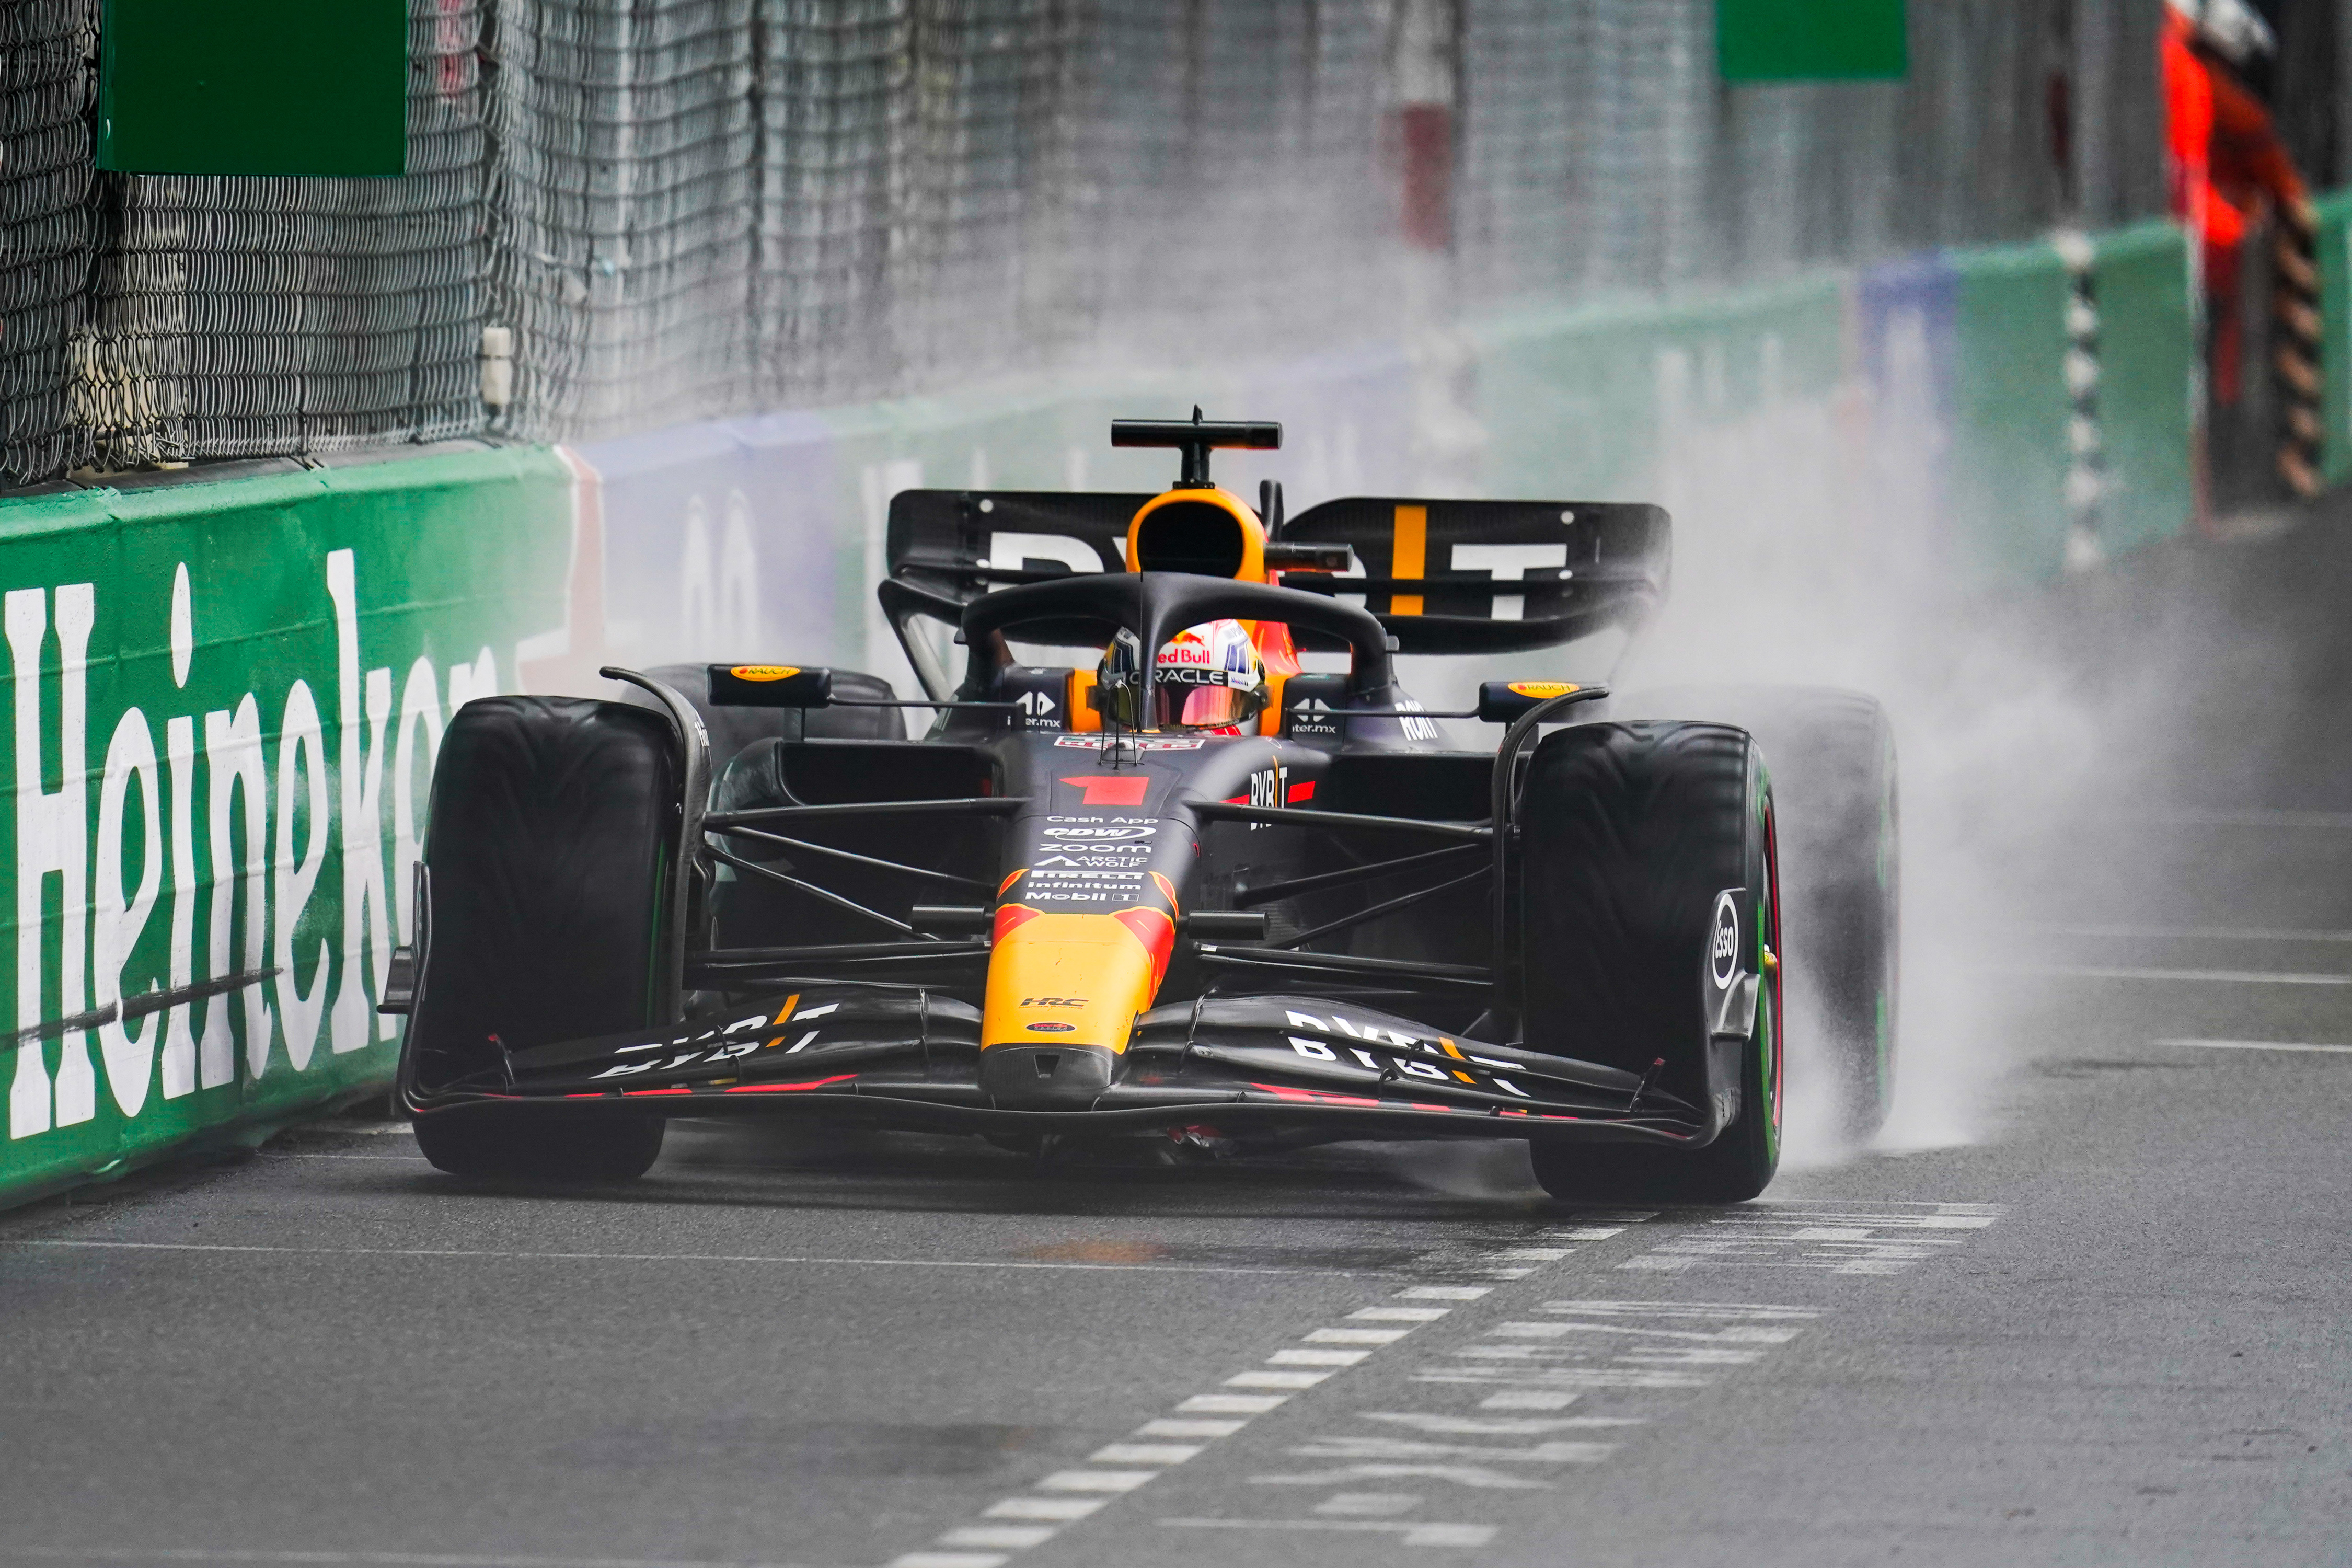 Monaco Grand Prix: 12 stunning photos from Max Verstappen Monaco win